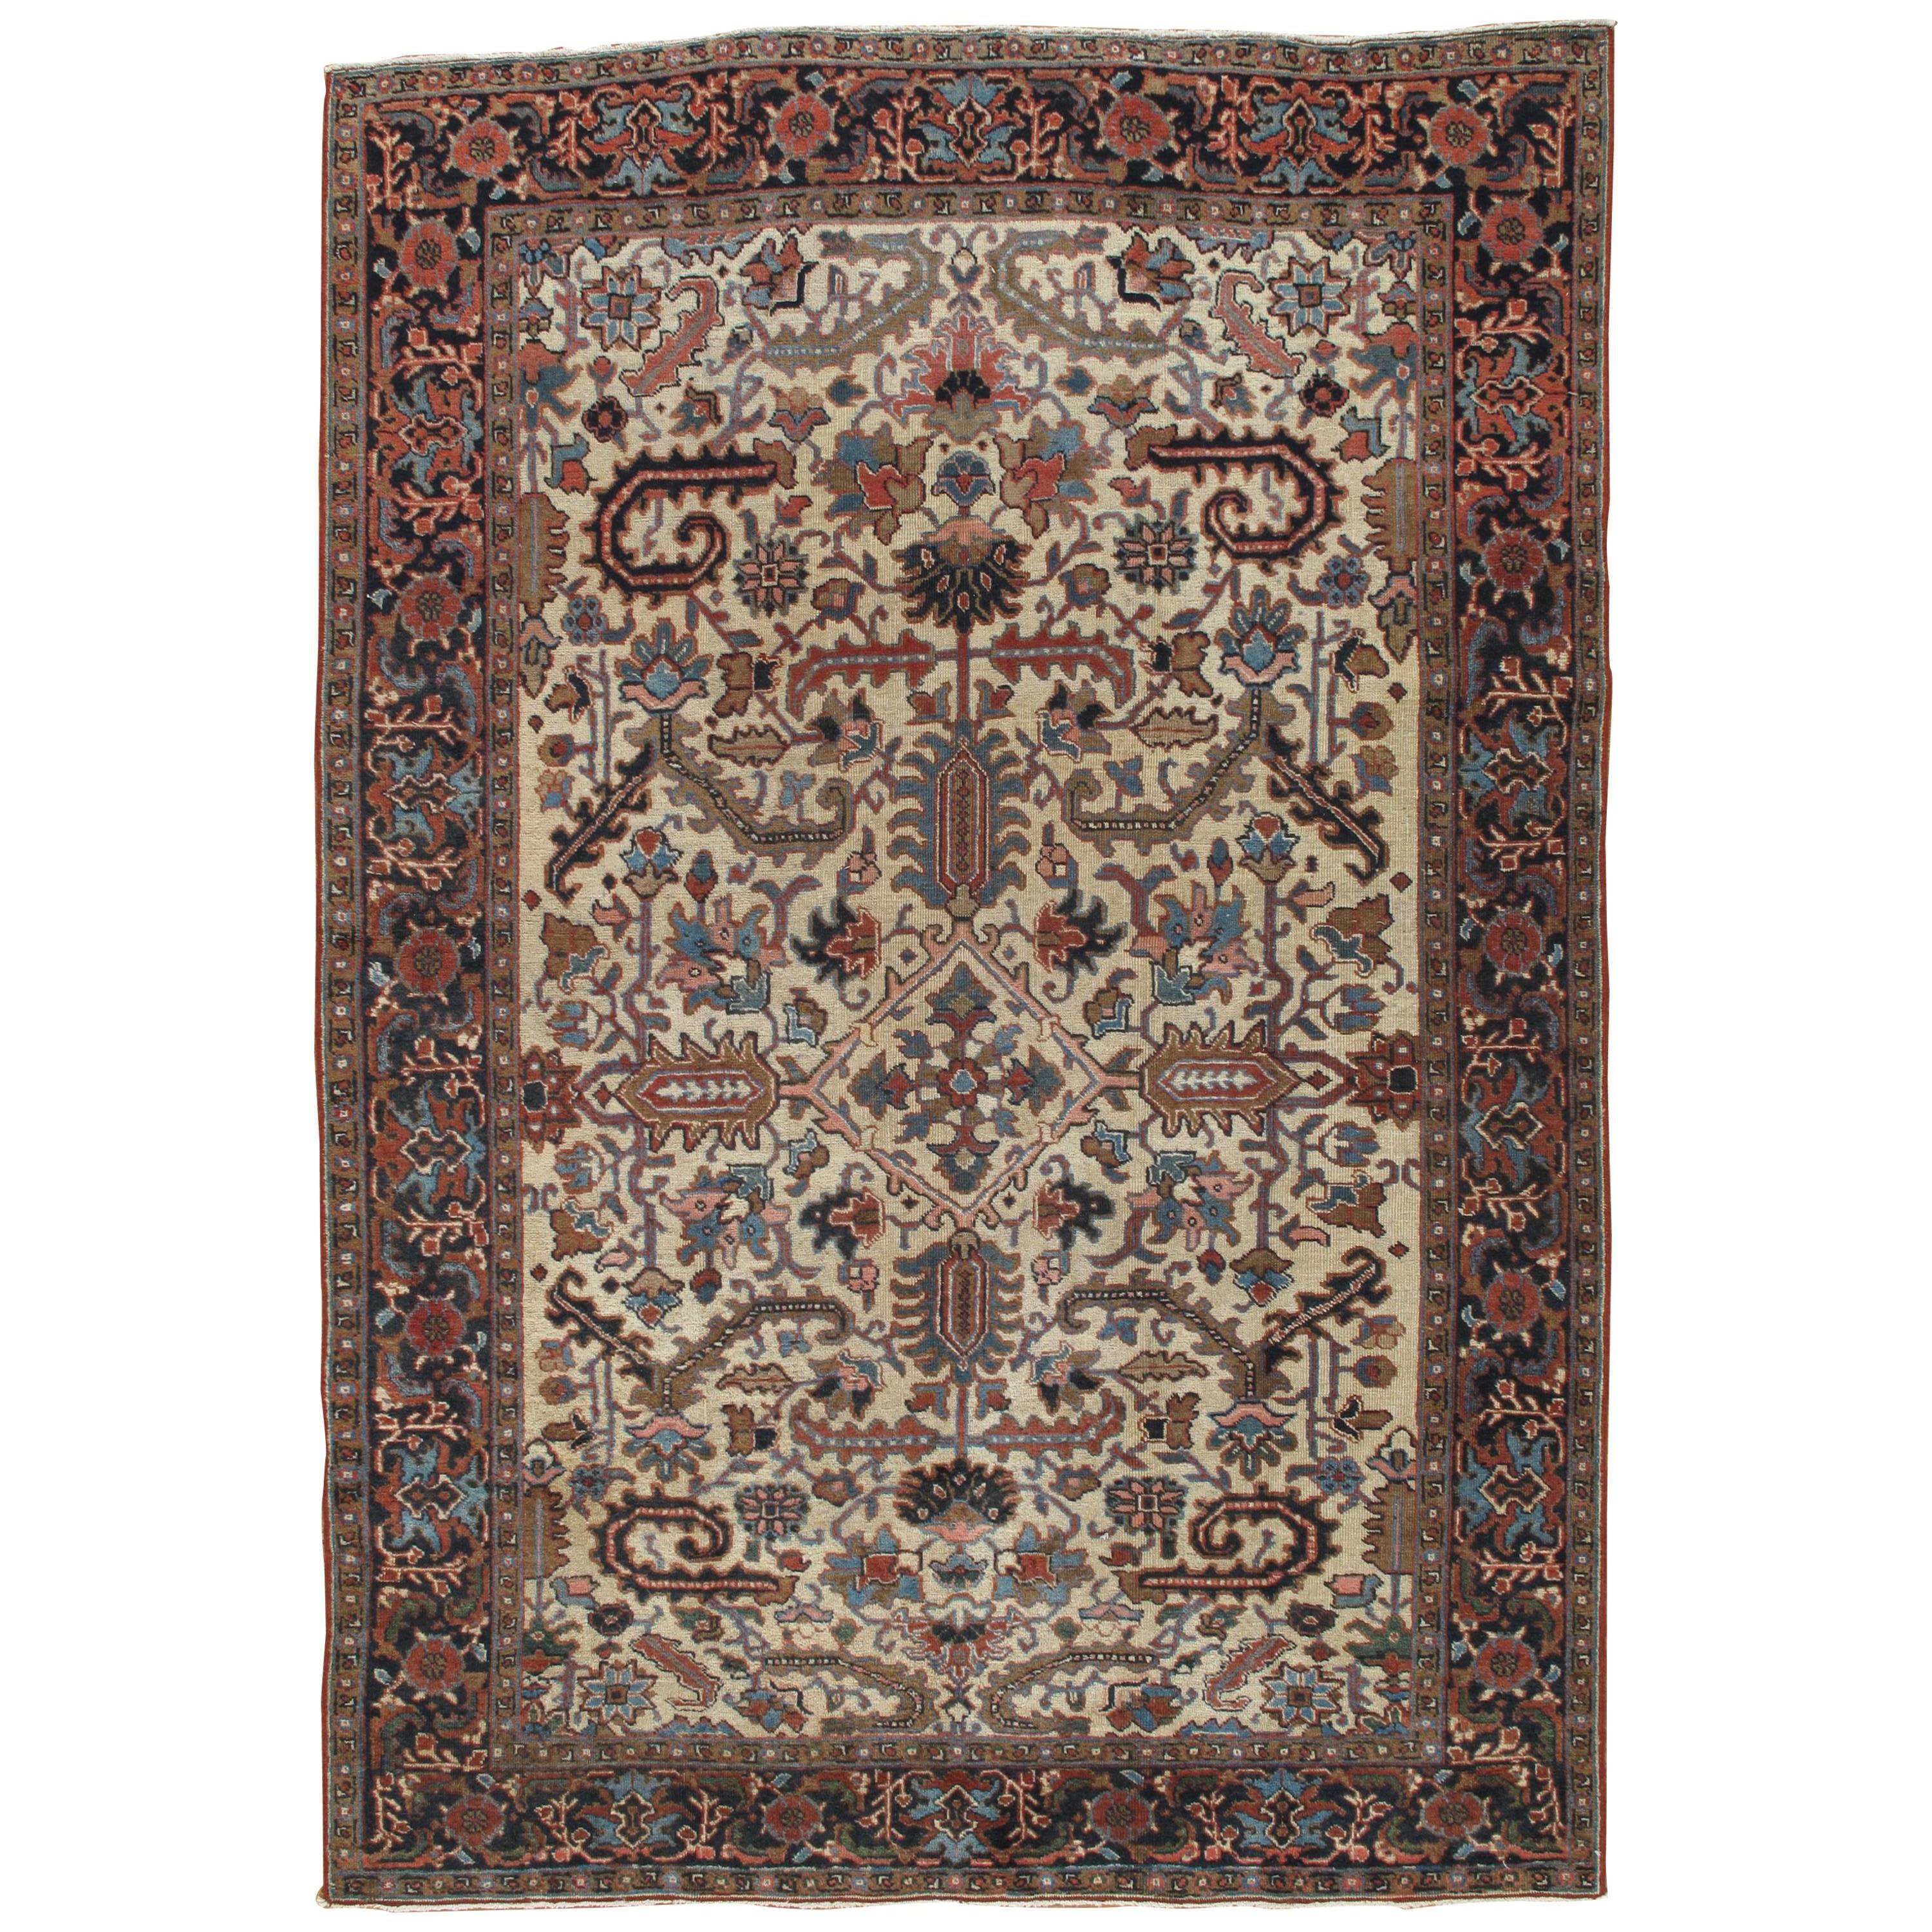 Antique Persian Heriz Carpet, Handmade Wool Oriental Rug, Ivory and Light Blue For Sale